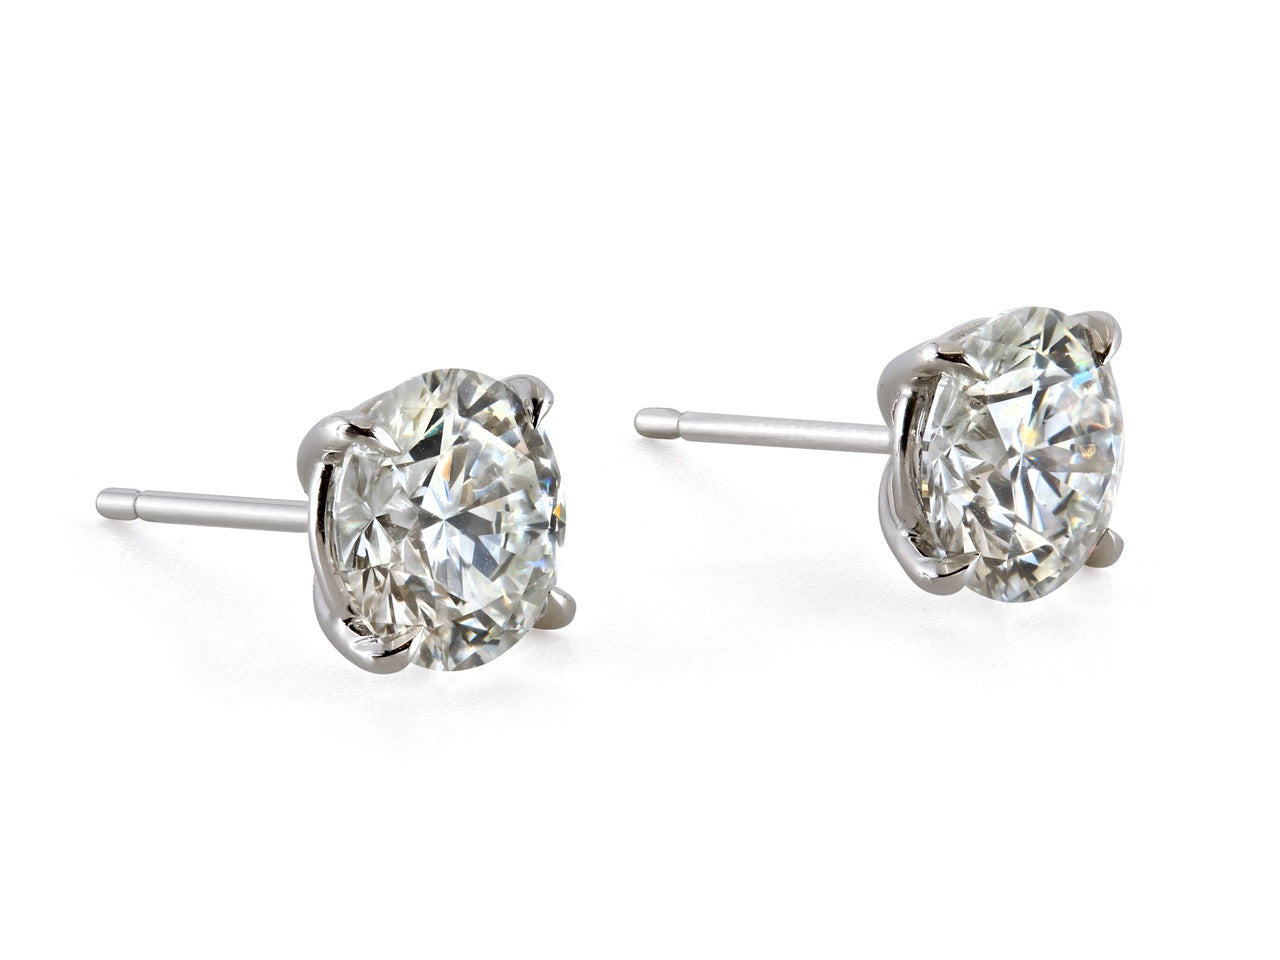 Diamond Stud Earrings, 4.24 total carats Triple Ex, in Platinum